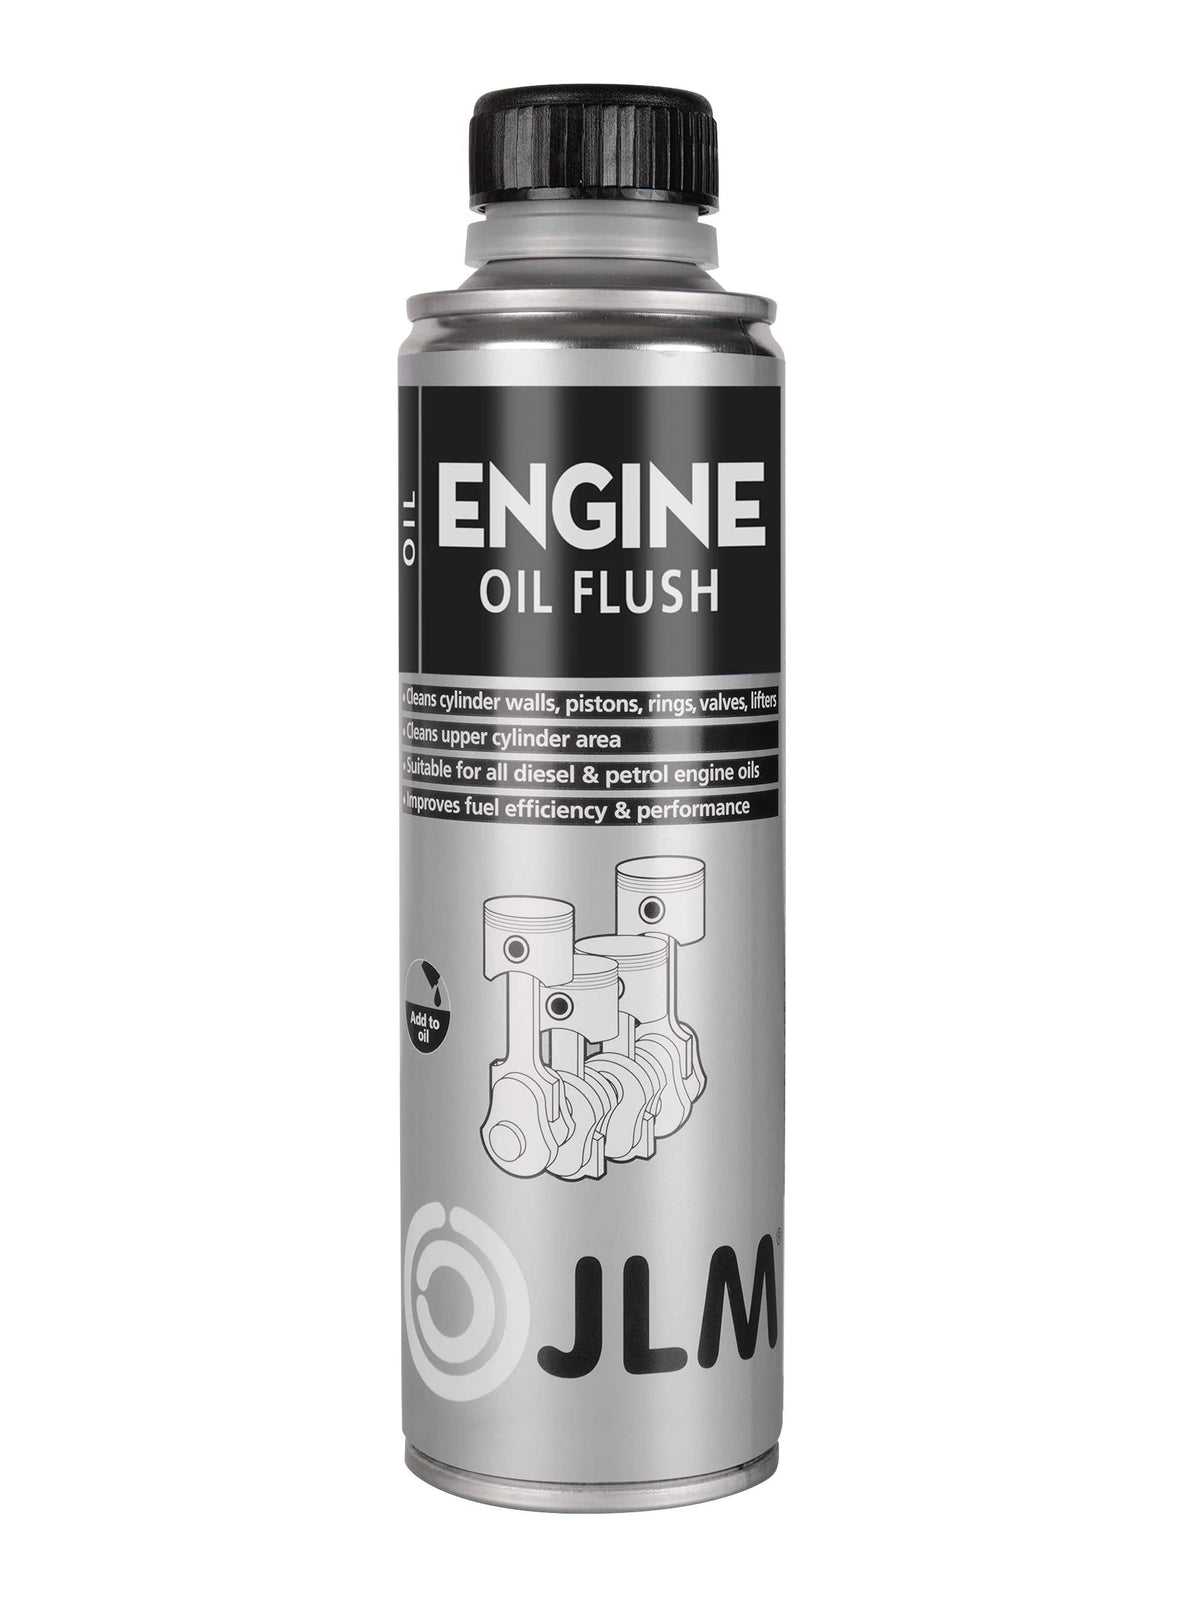 Diesel -Particulate-Filter-Cleaner-Spray - JLM Lubricants